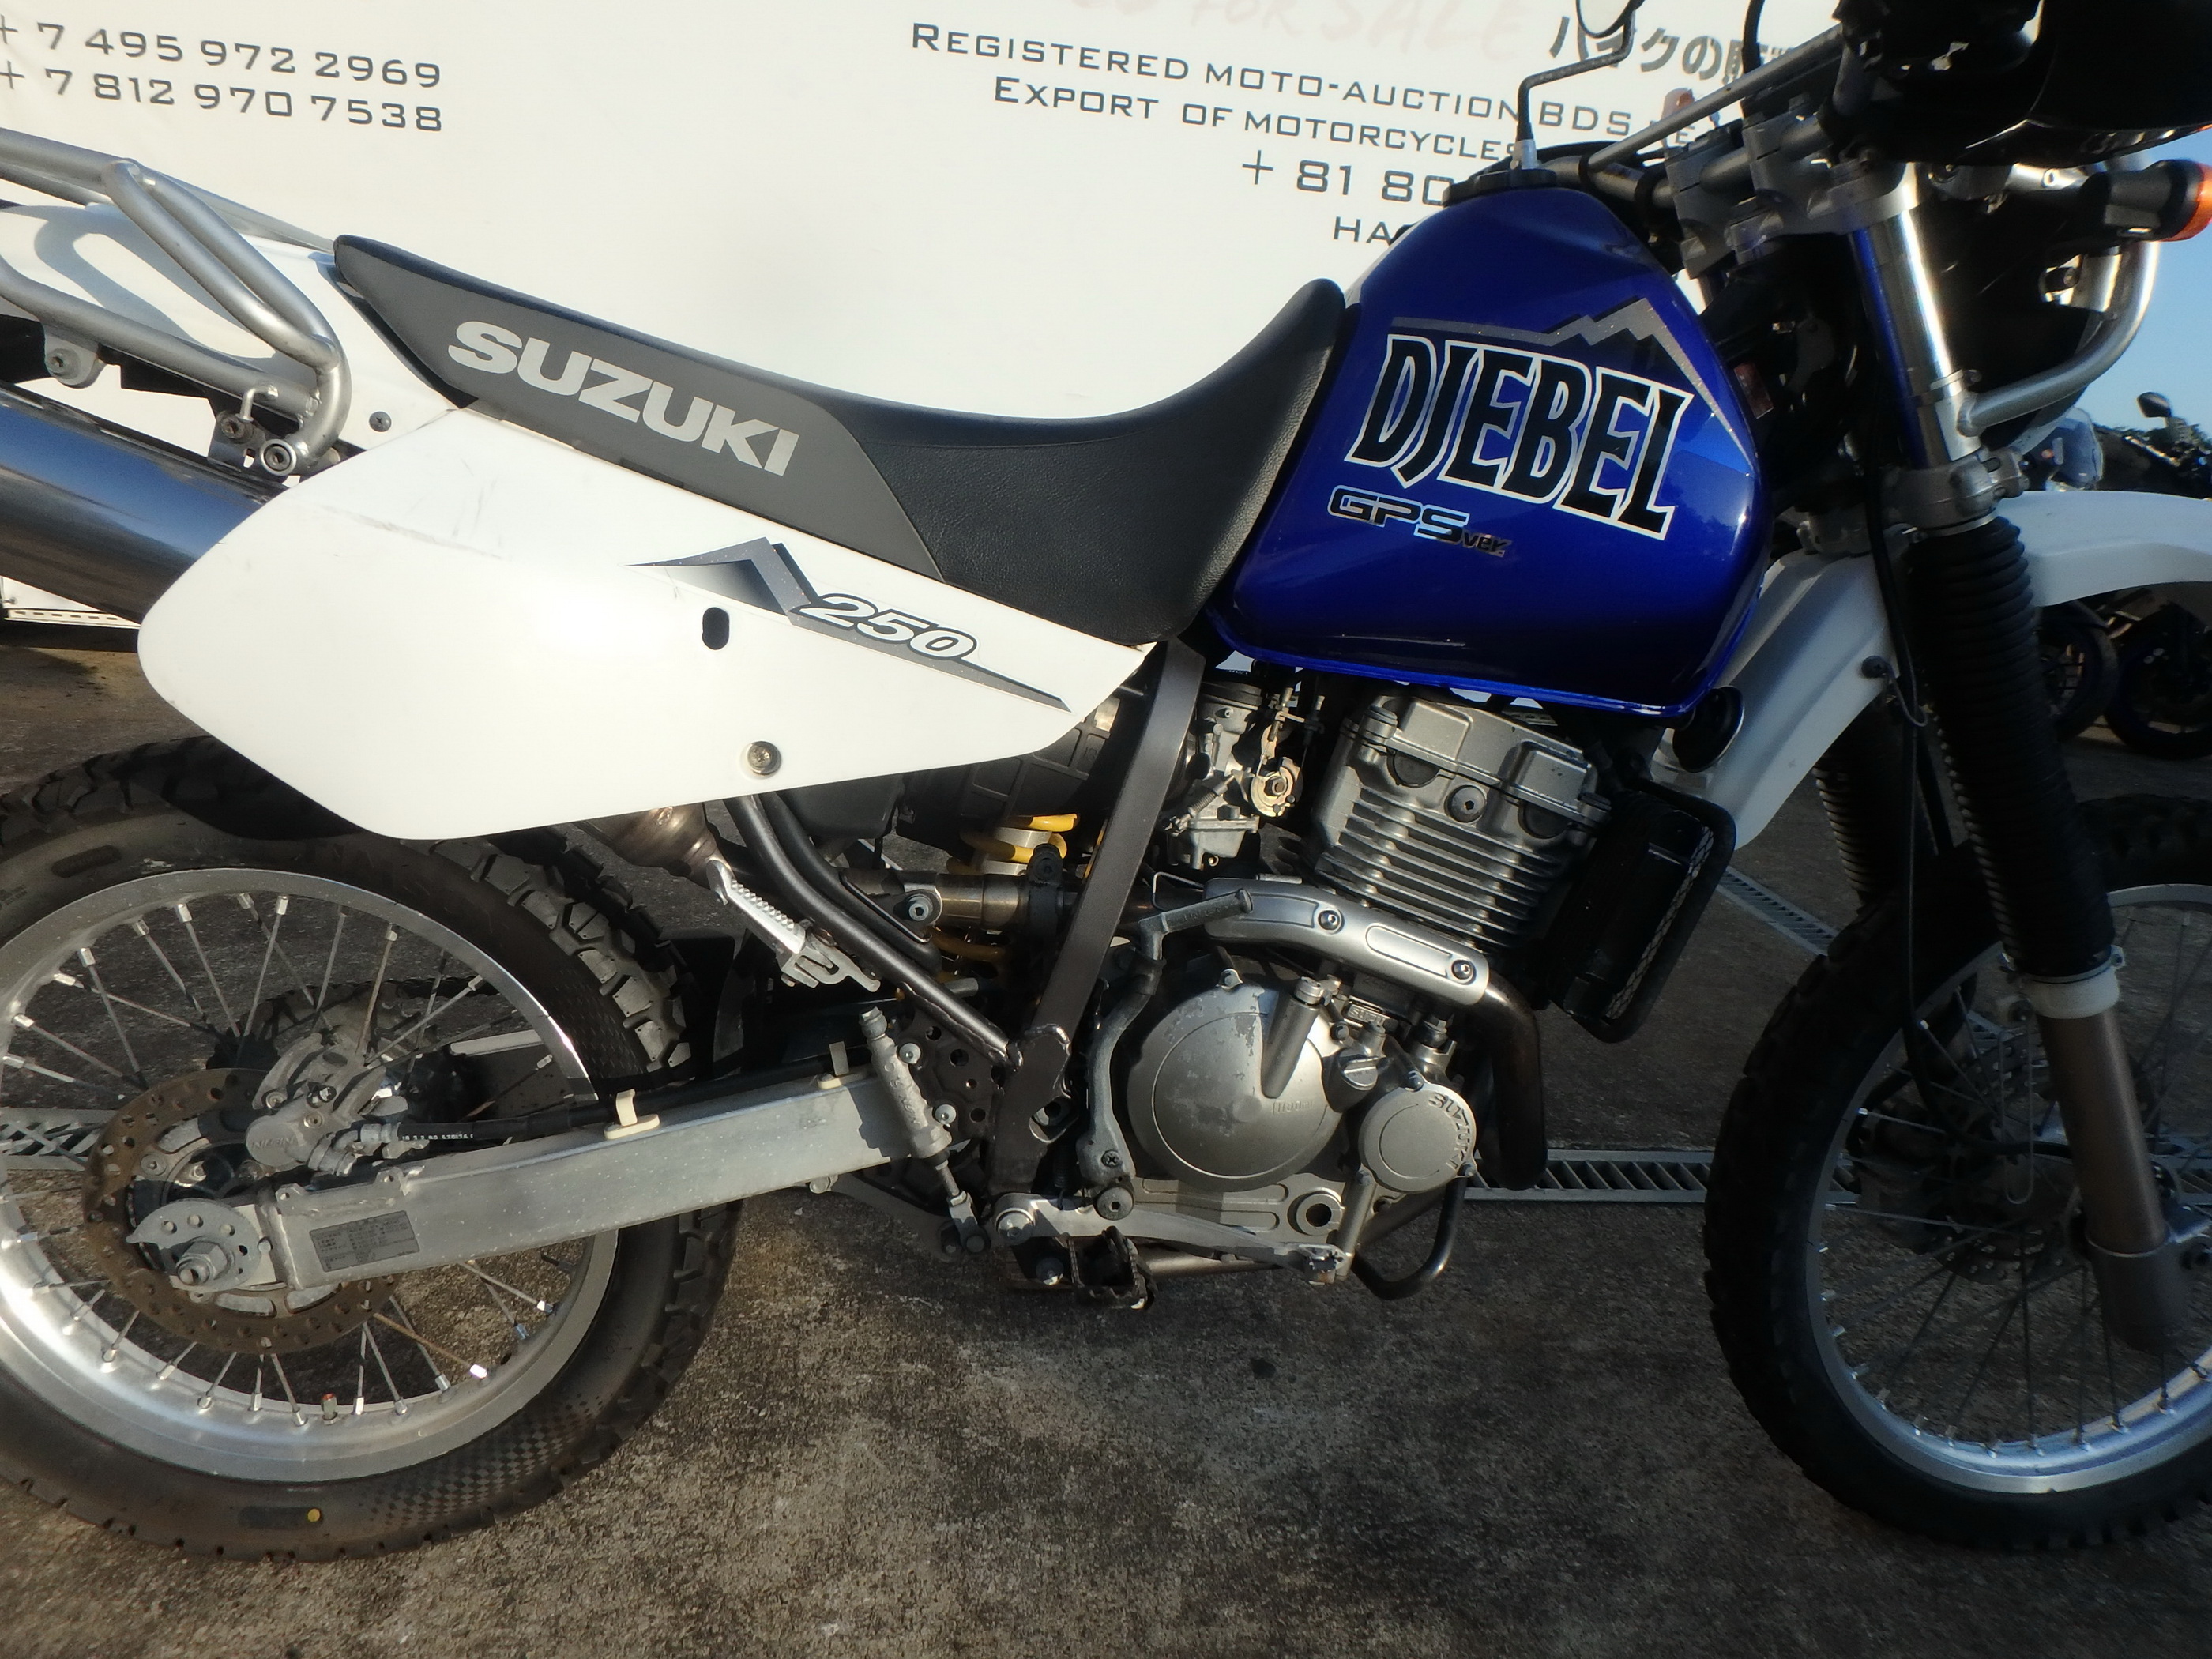 Купить мотоцикл Suzuki Djebel250GPS DR250 2000 фото 18